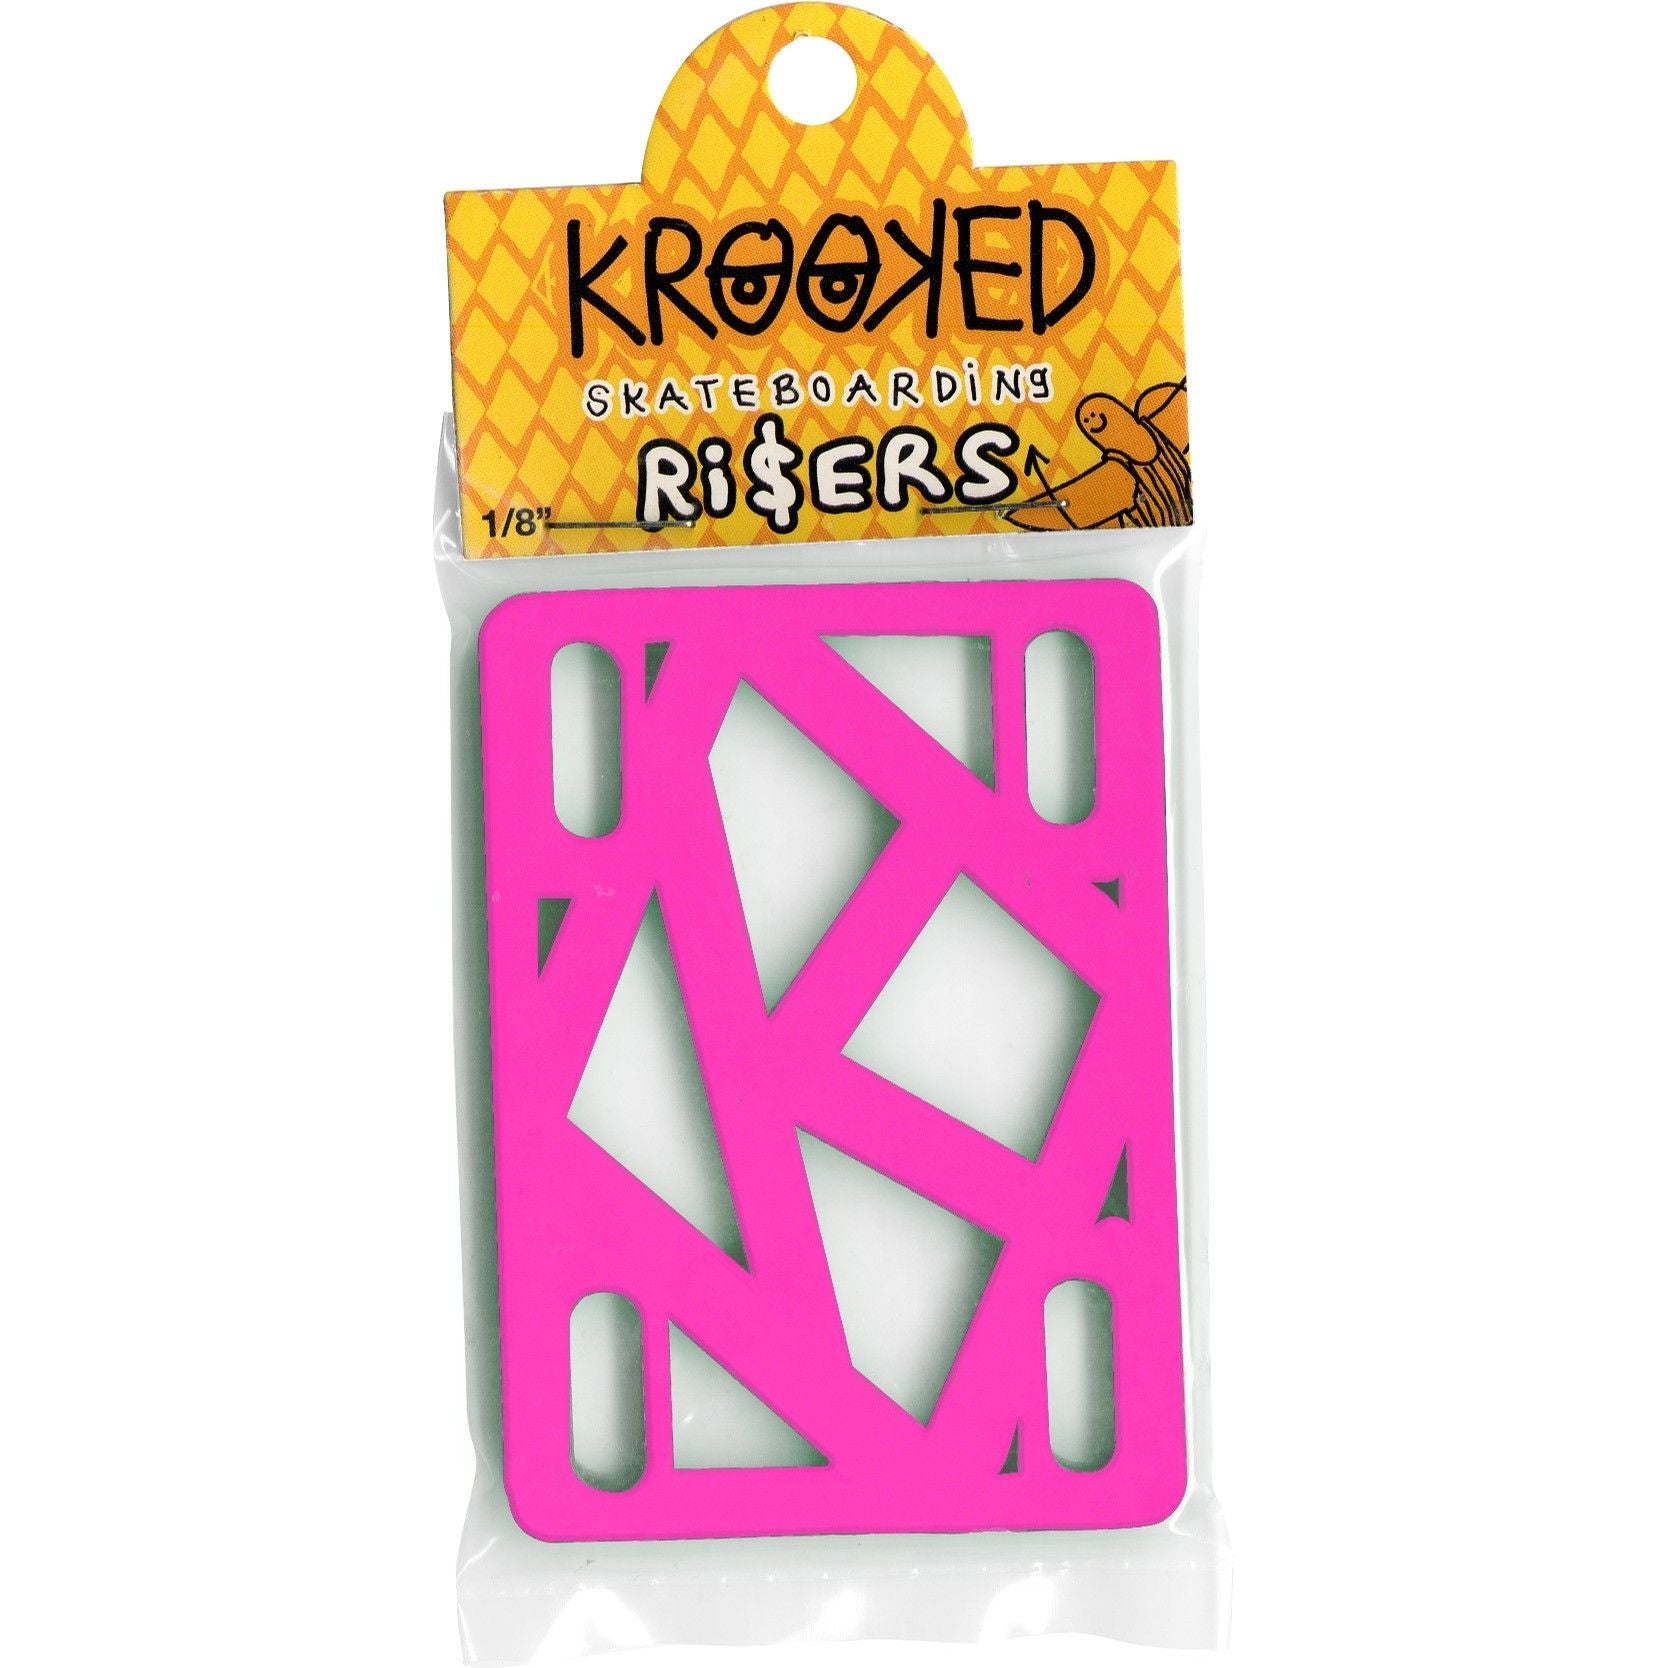 Krooked Riser 1/8" (PINK)